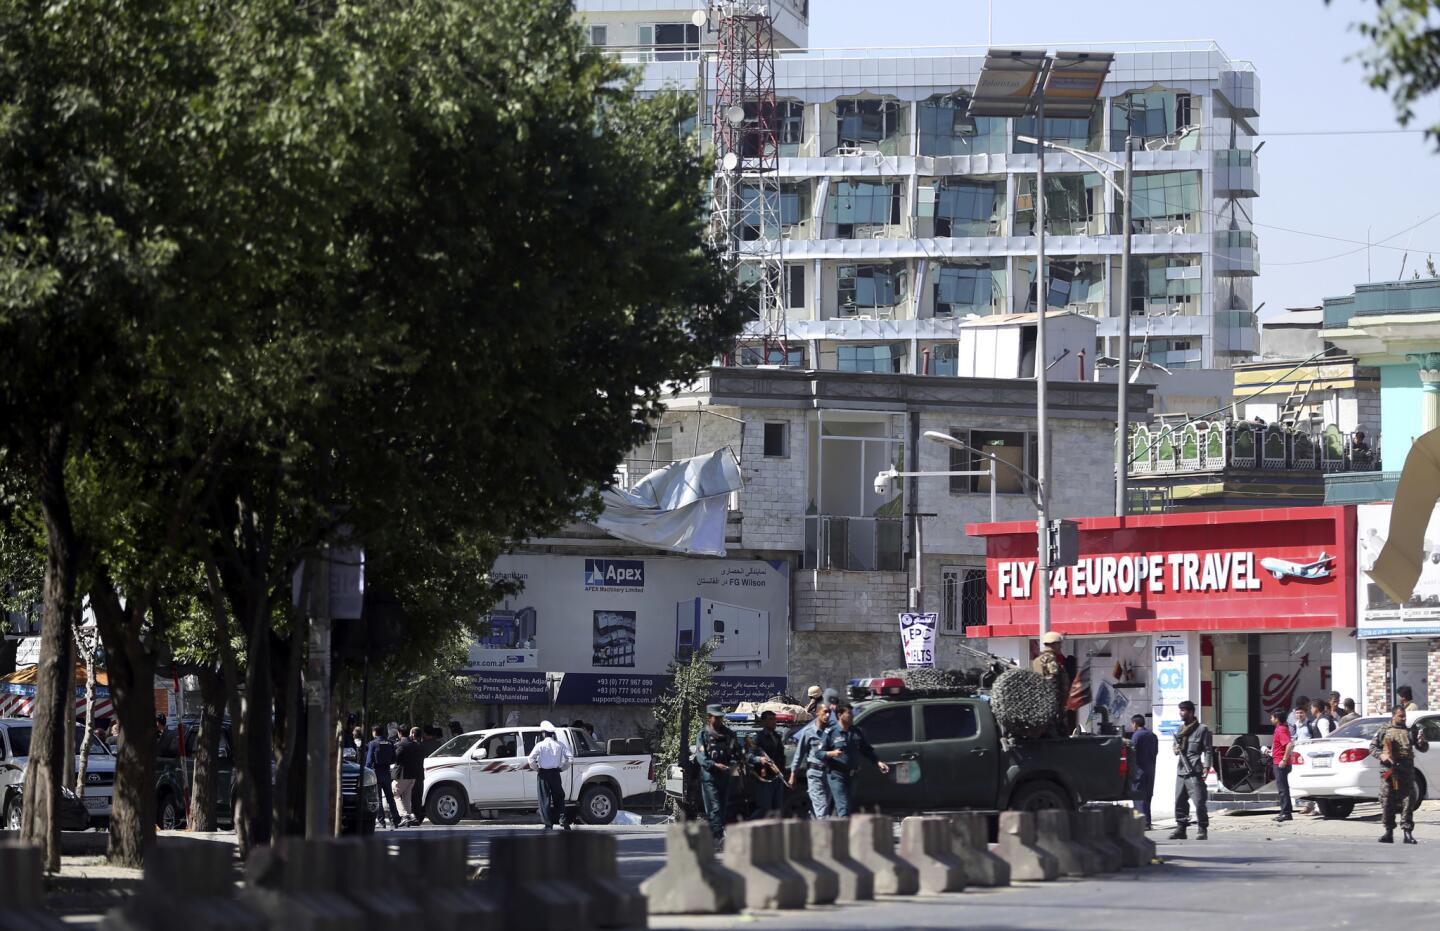 Kabul bombing